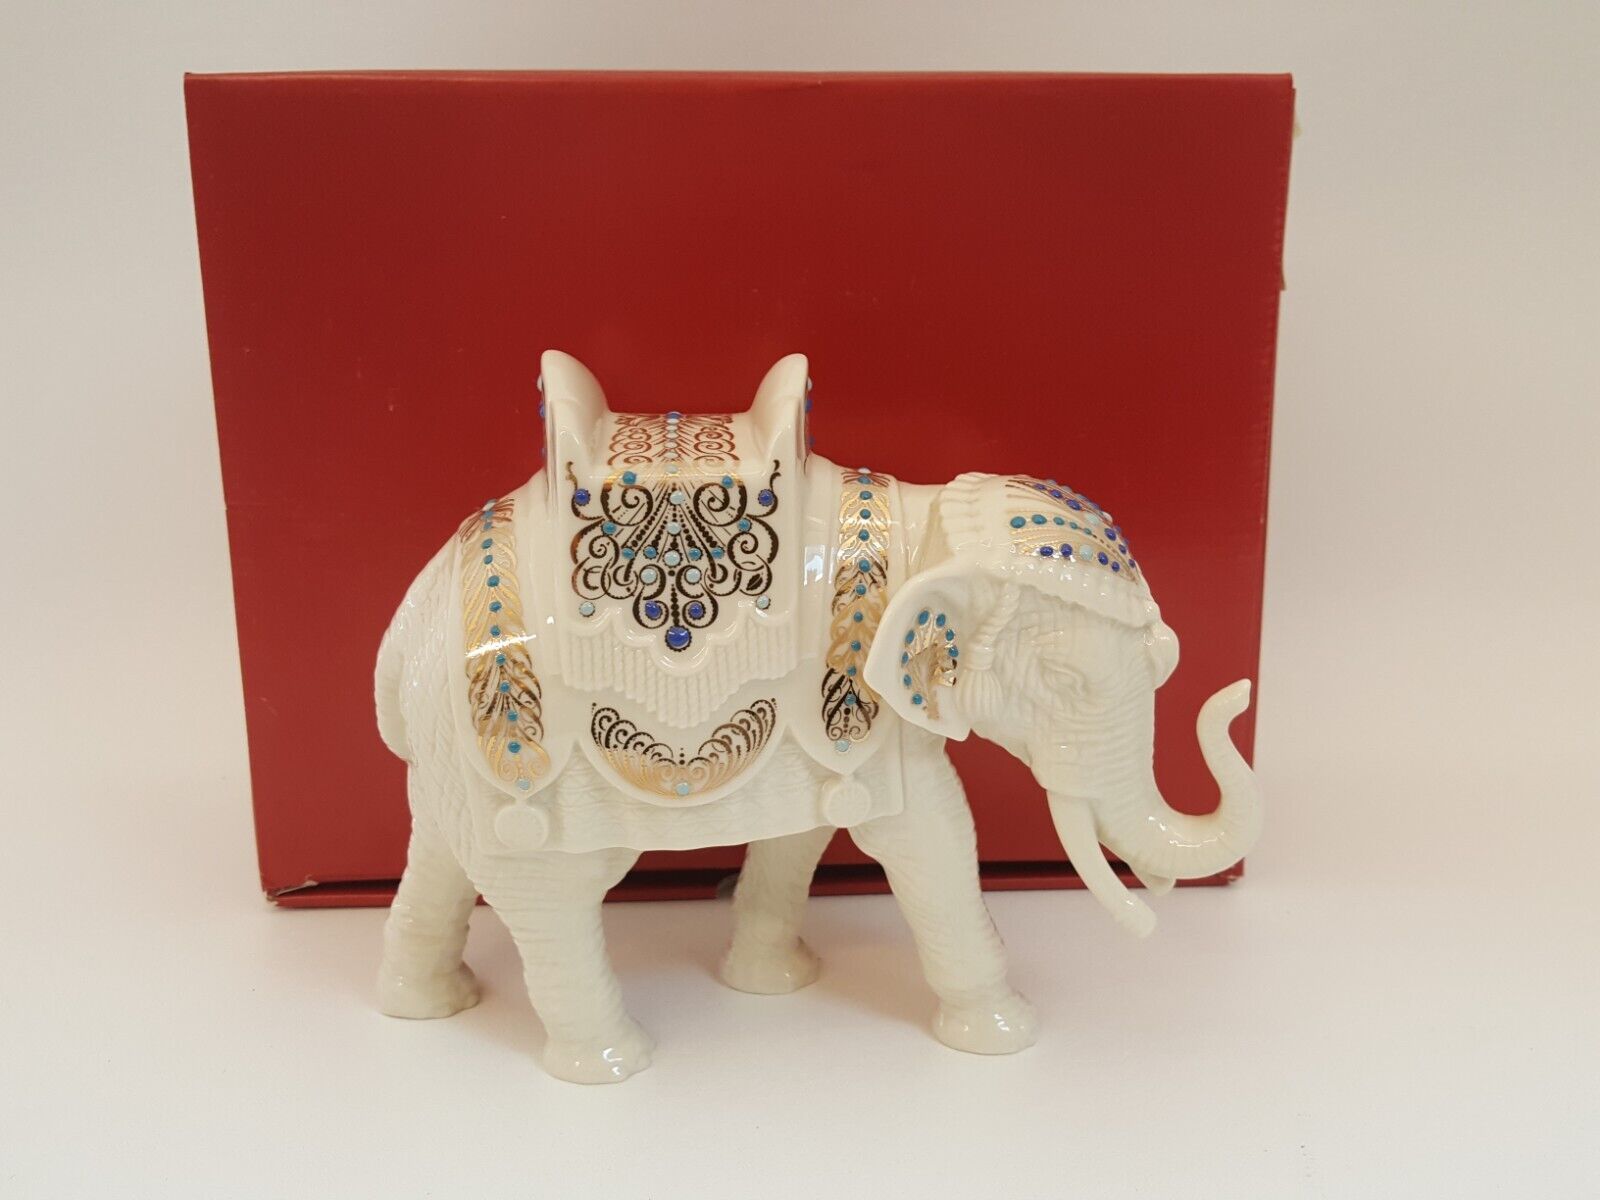 Lenox China Jewels elephant standing in orig box